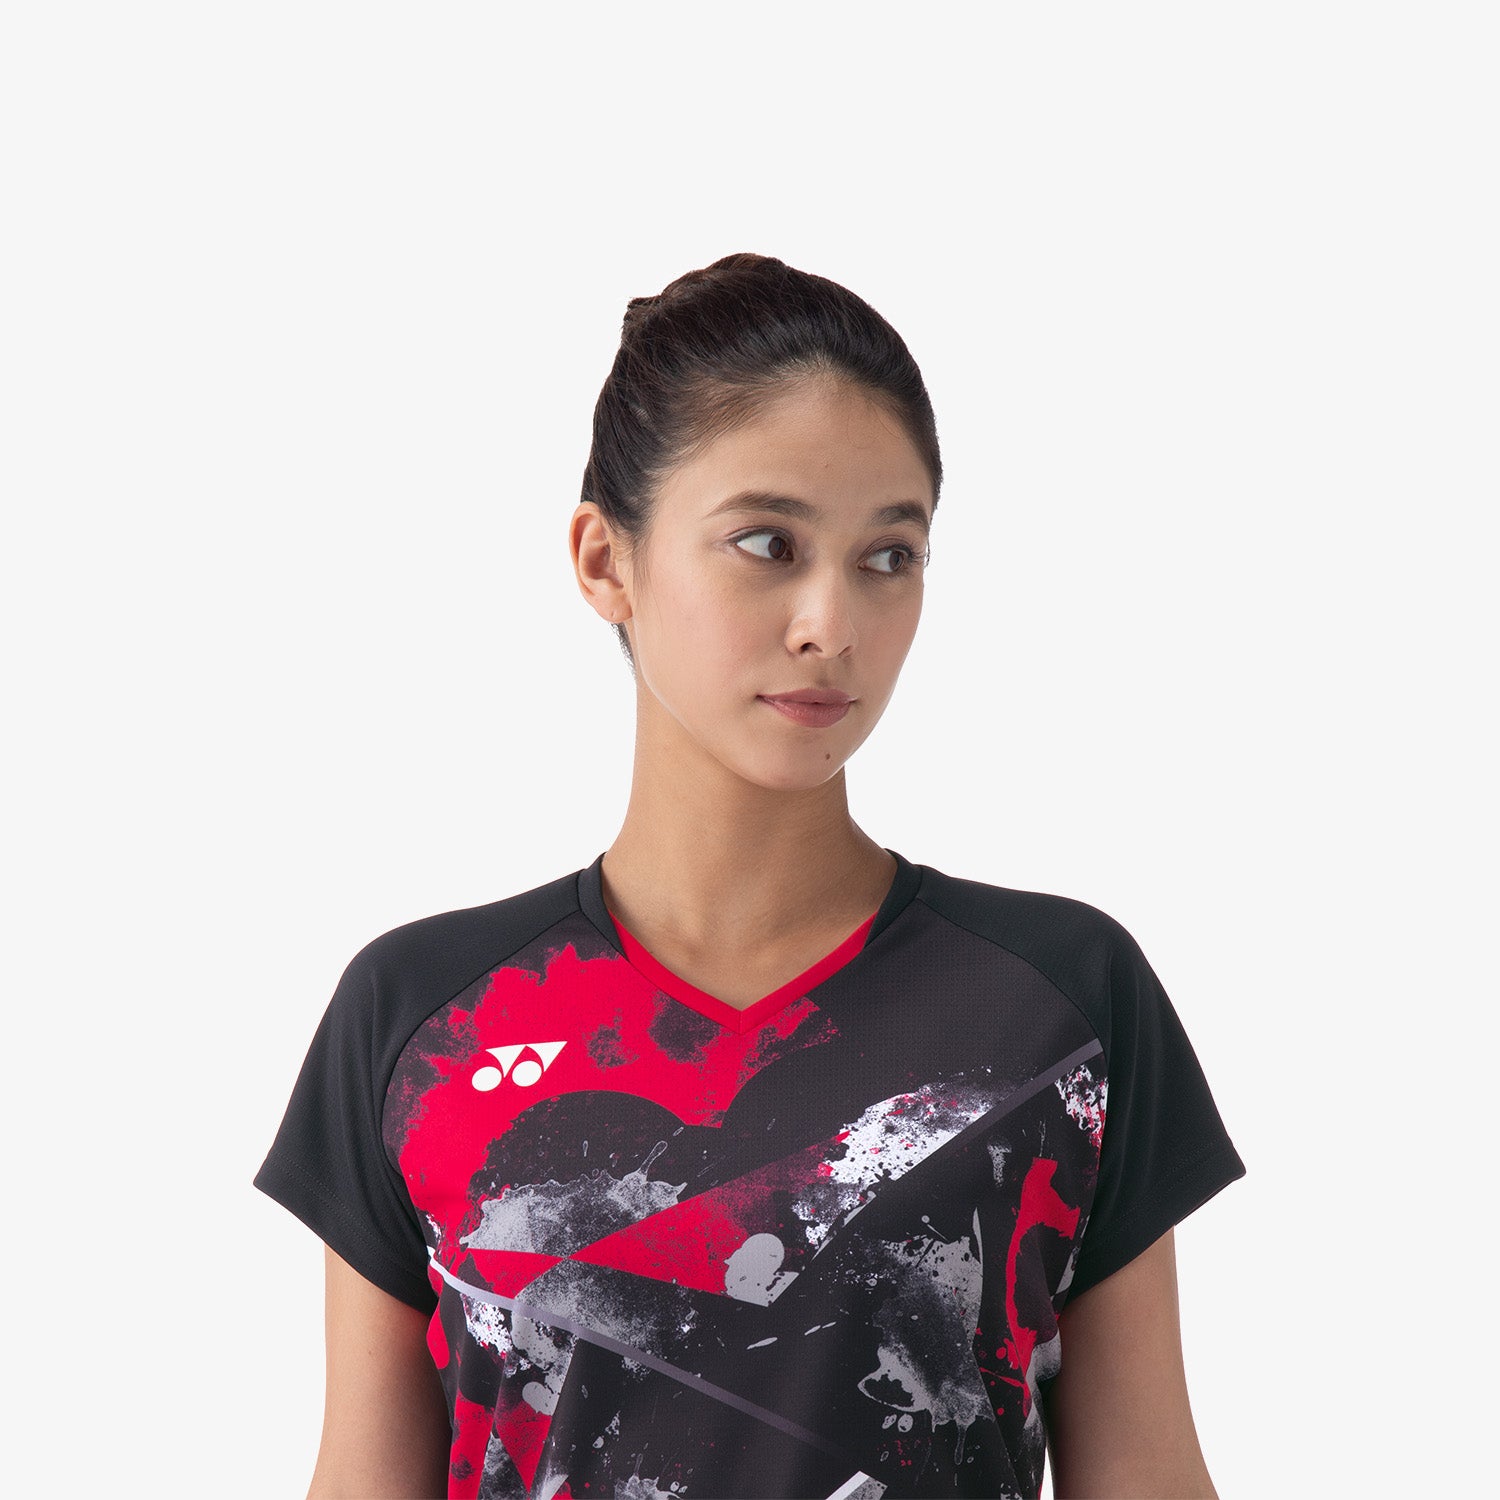 Yonex Women's Crew Neck Tournament Shirt 20771BK (Black)